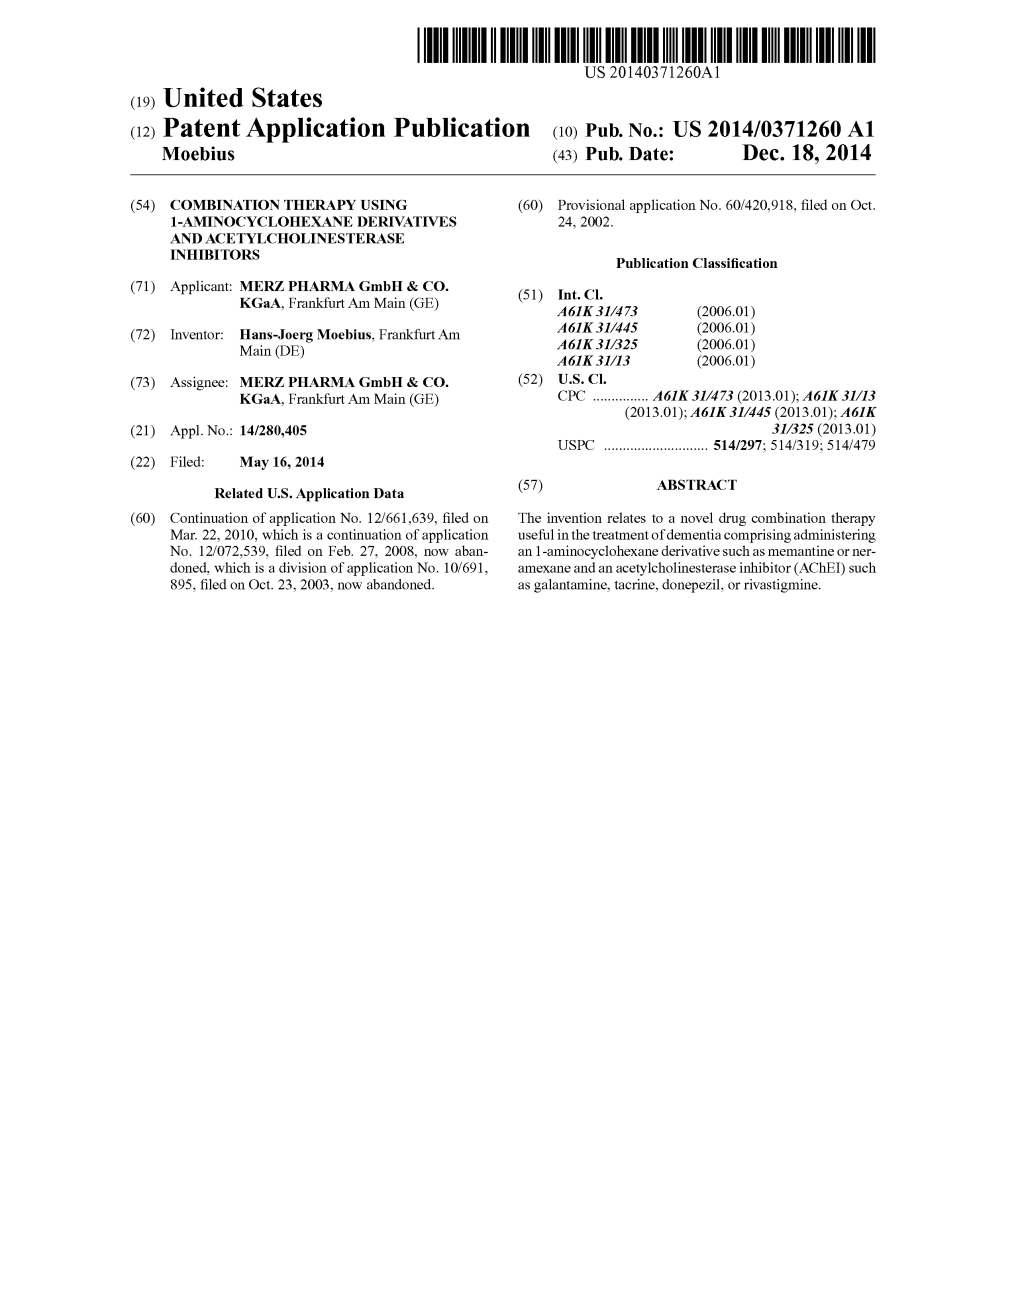 (12) Patent Application Publication (10) Pub. No.: US 2014/0371260 A1 Moebius (43) Pub